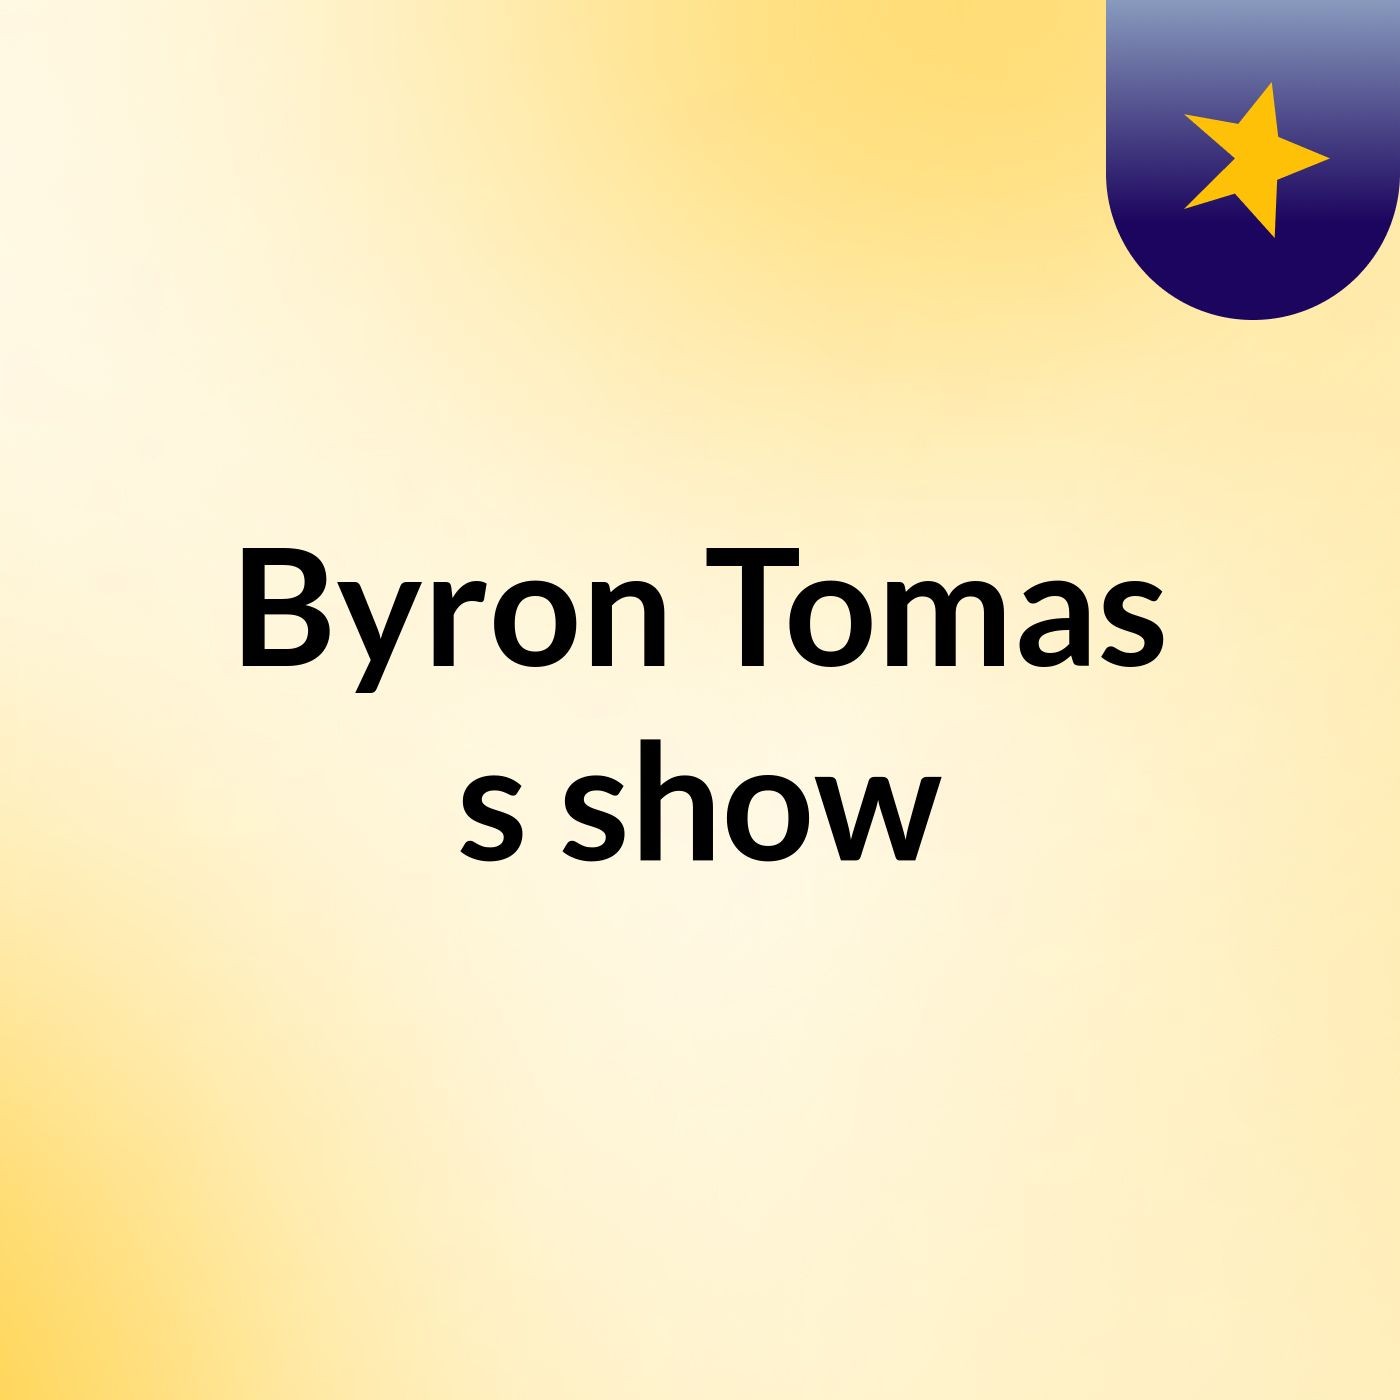 Byron Tomas's show